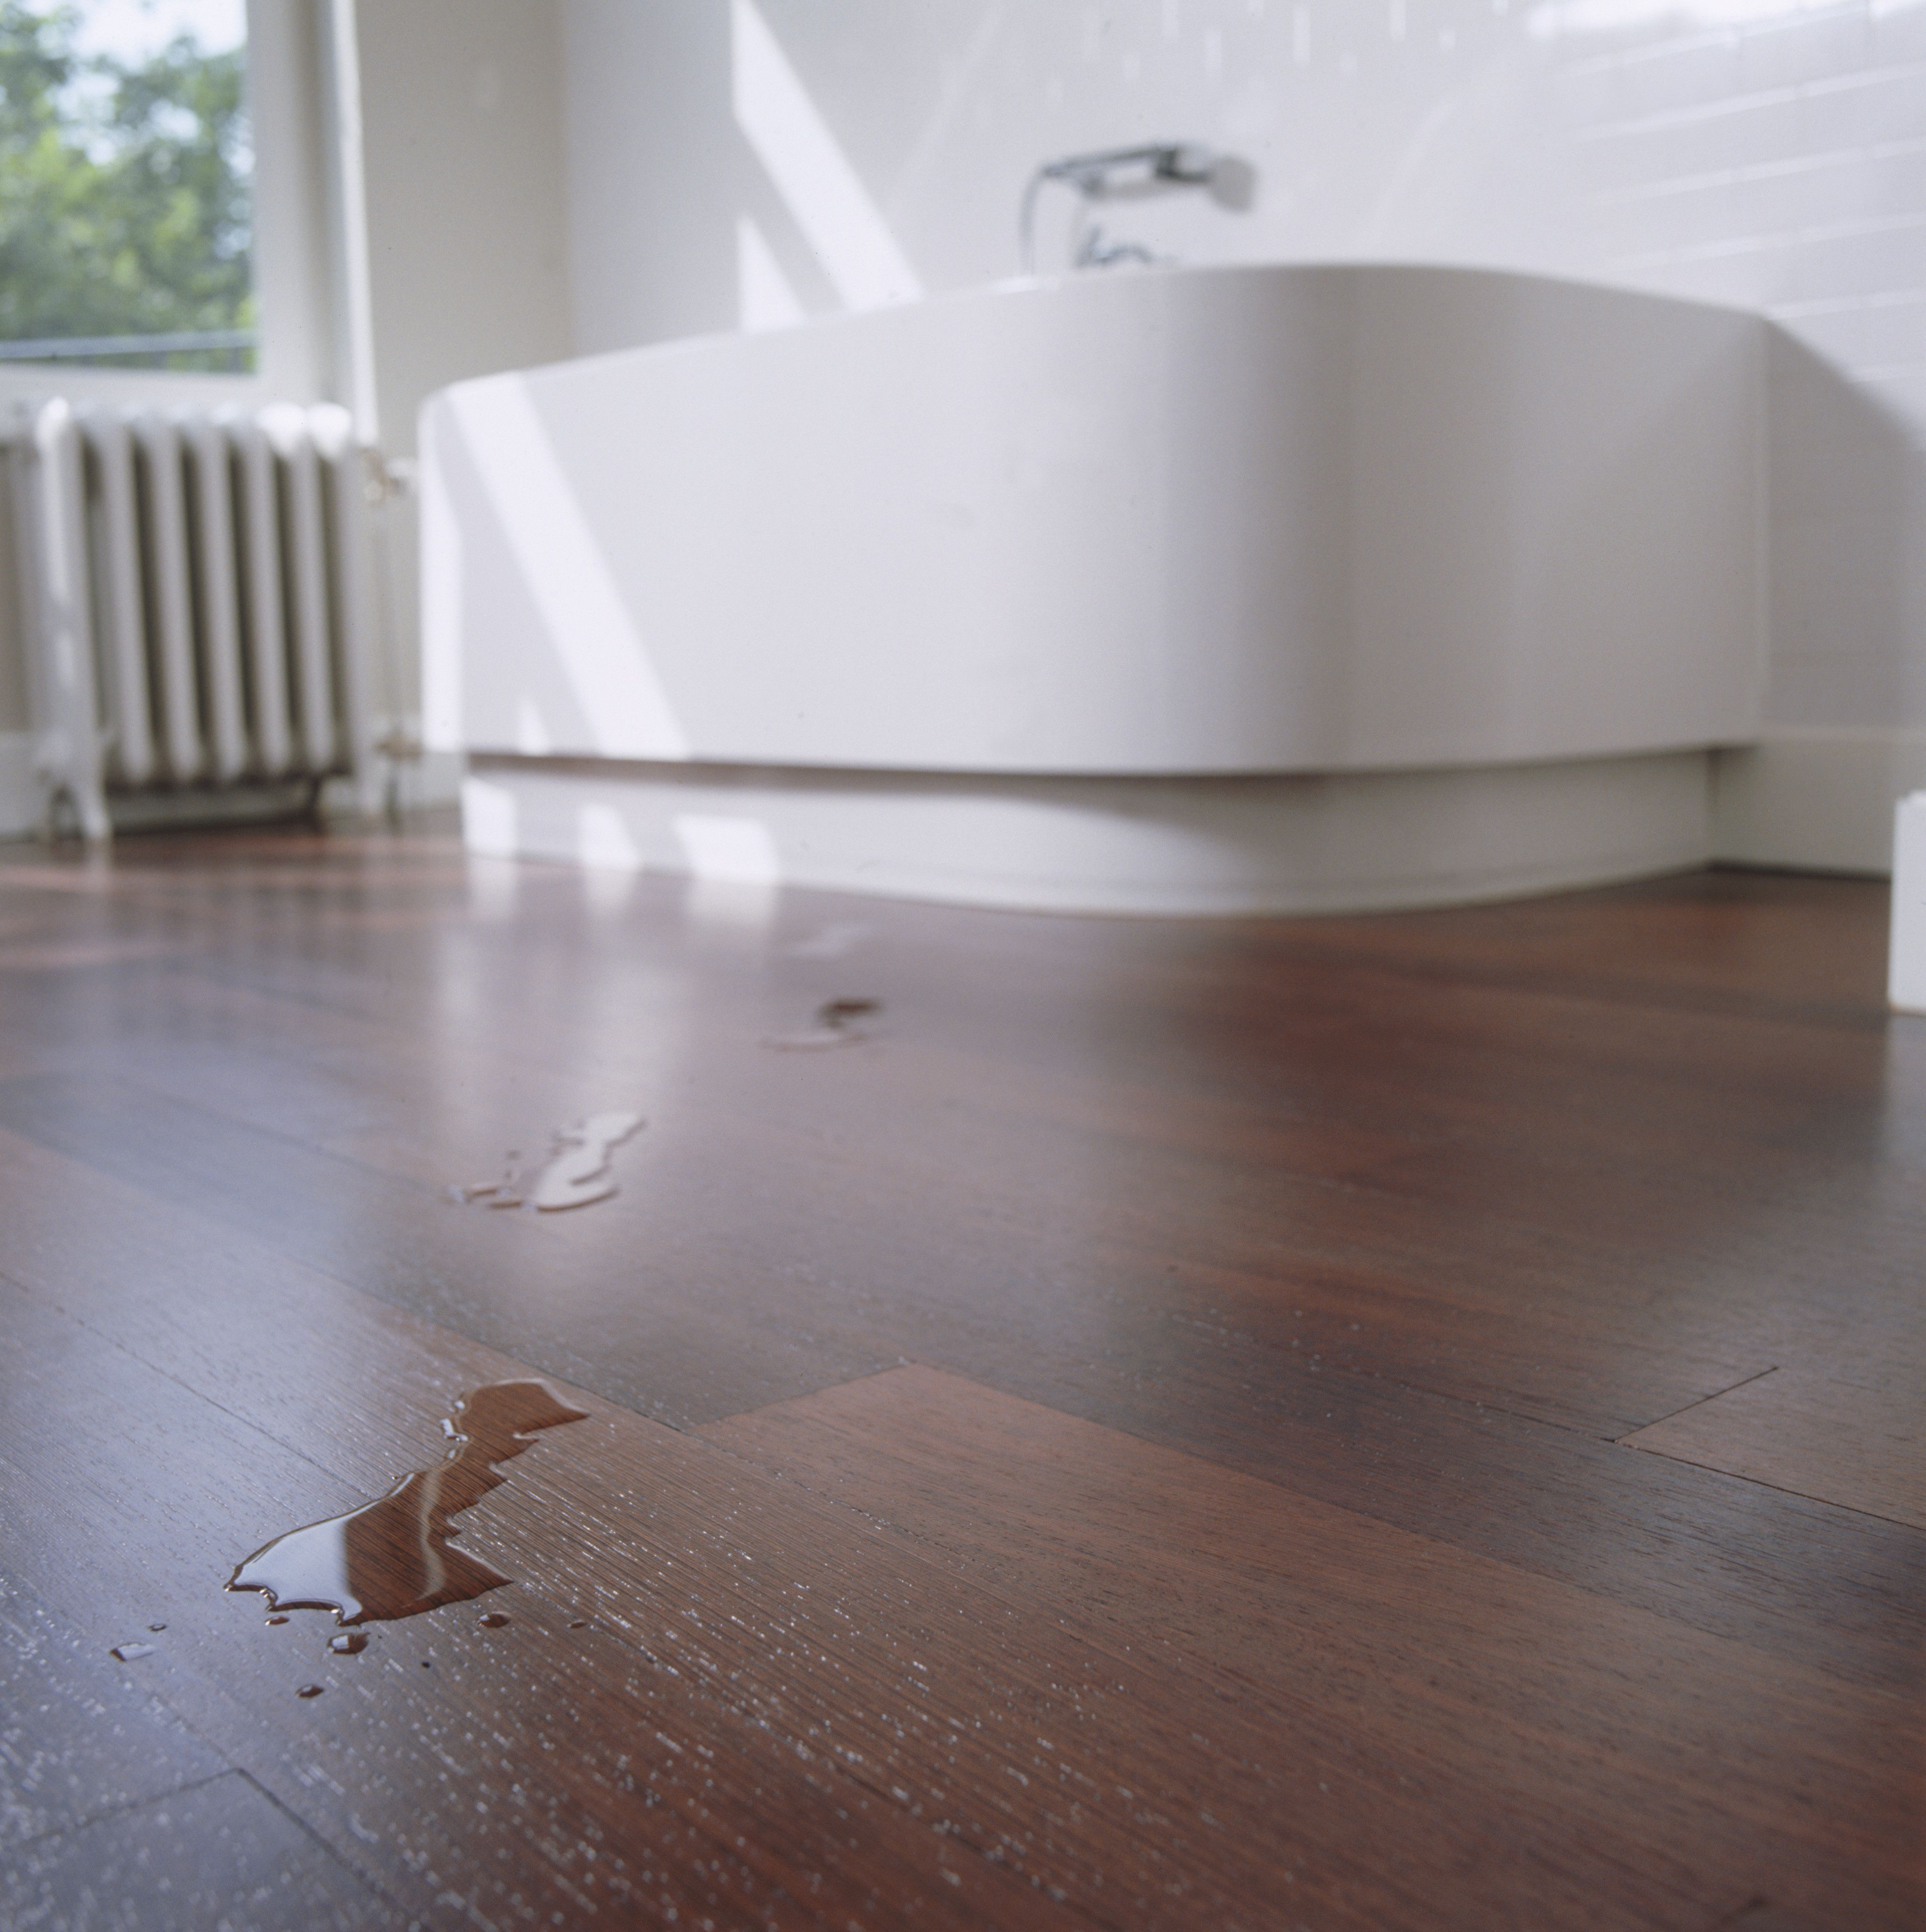 staining hardwood floors yourself of hardwood flooring for bathrooms what to consider regarding hardwoodbathroom 588f341e3df78caebccc9ec2